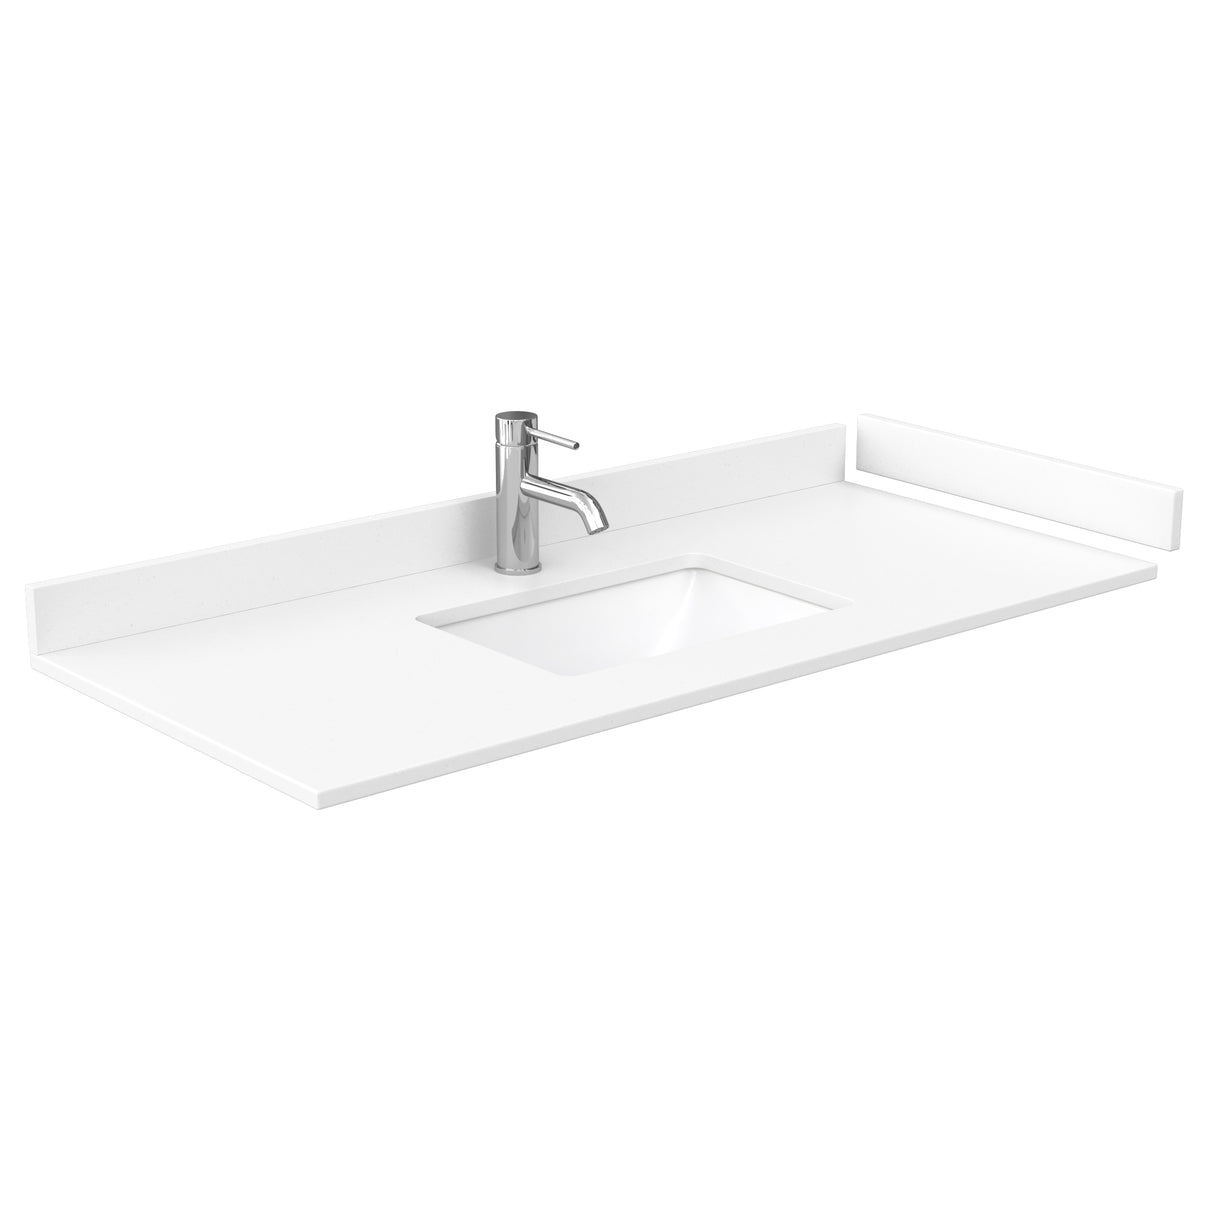 Strada 48 Inch Single Bathroom Vanity in Dark Gray White Cultured Marble Countertop Undermount Square Sink Brushed Nickel Trim